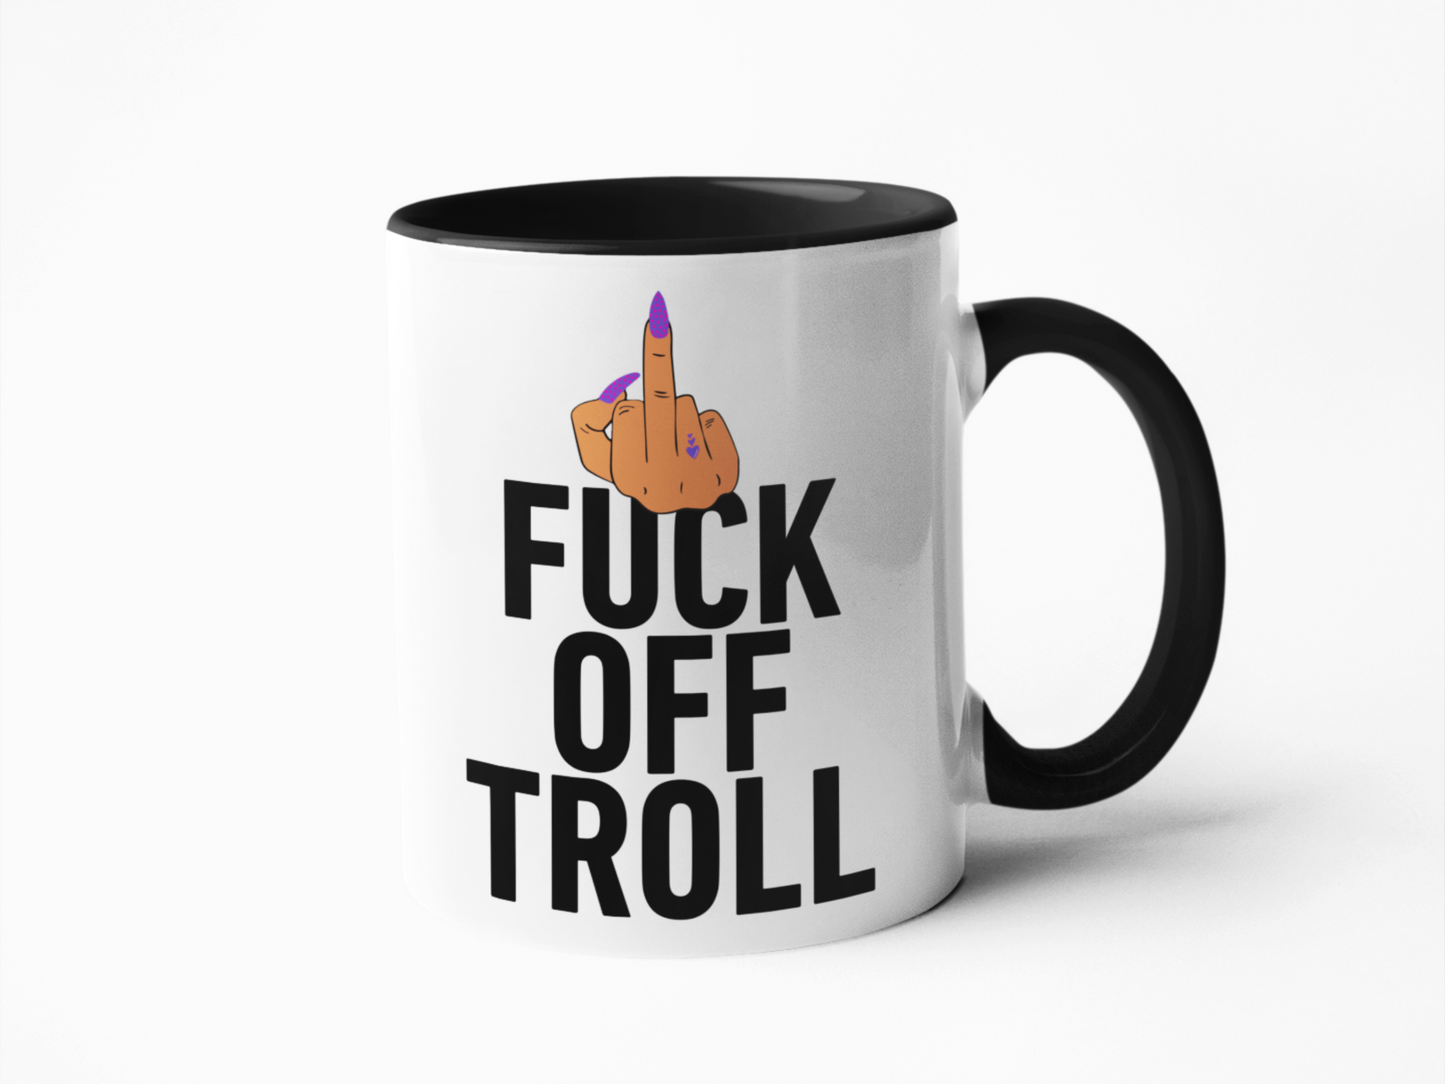 Fuck off troll funny coffee mug